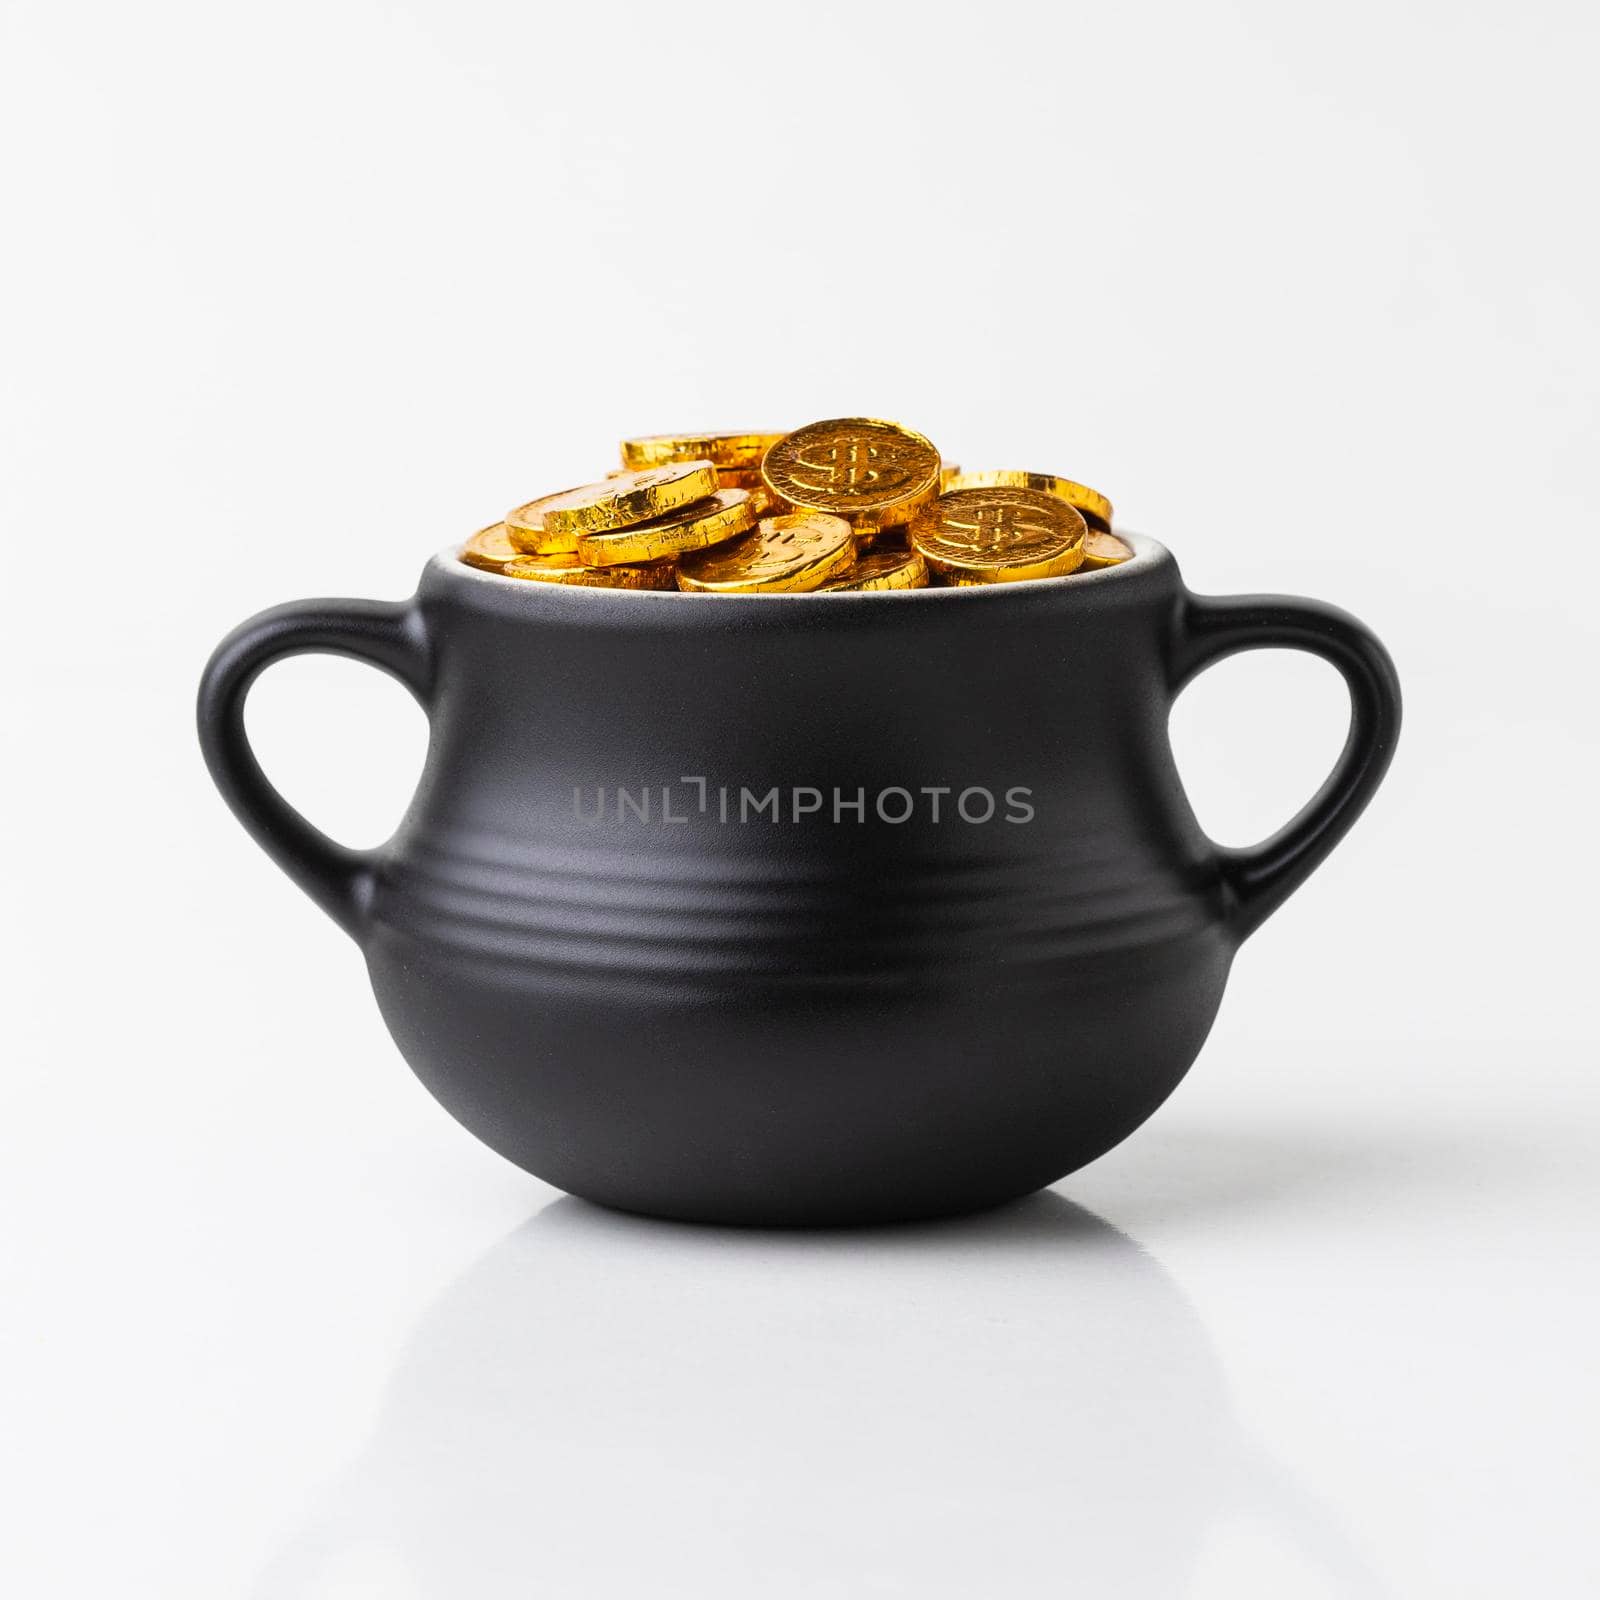 cauldron with gold coins arrangement. High quality photo by Zahard